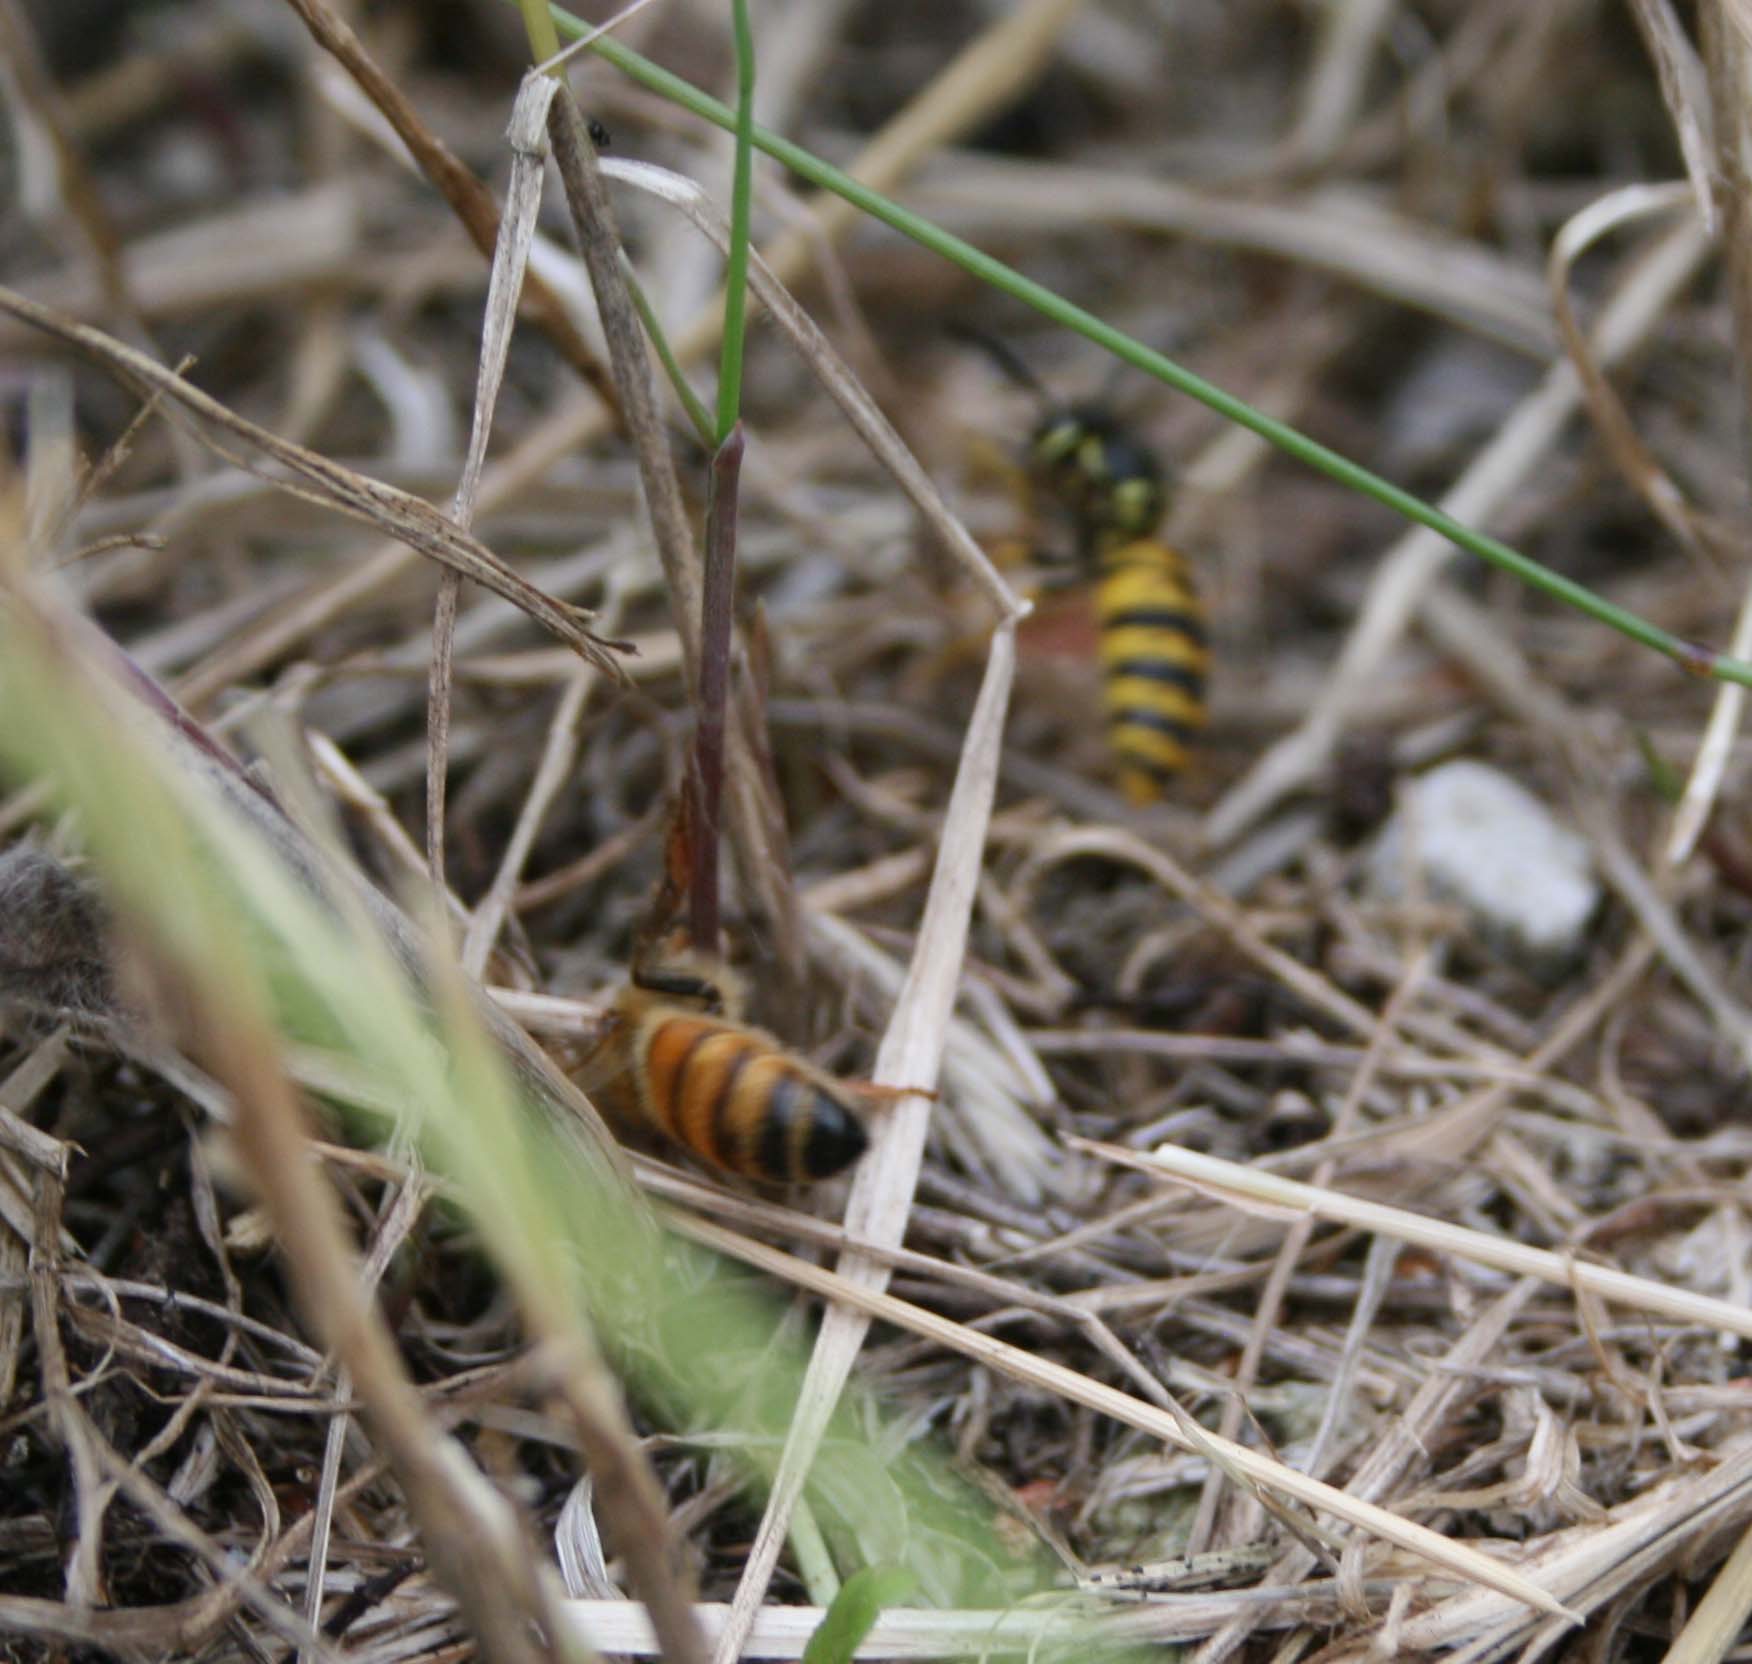 wasps-attacking-bees 093a.jpg